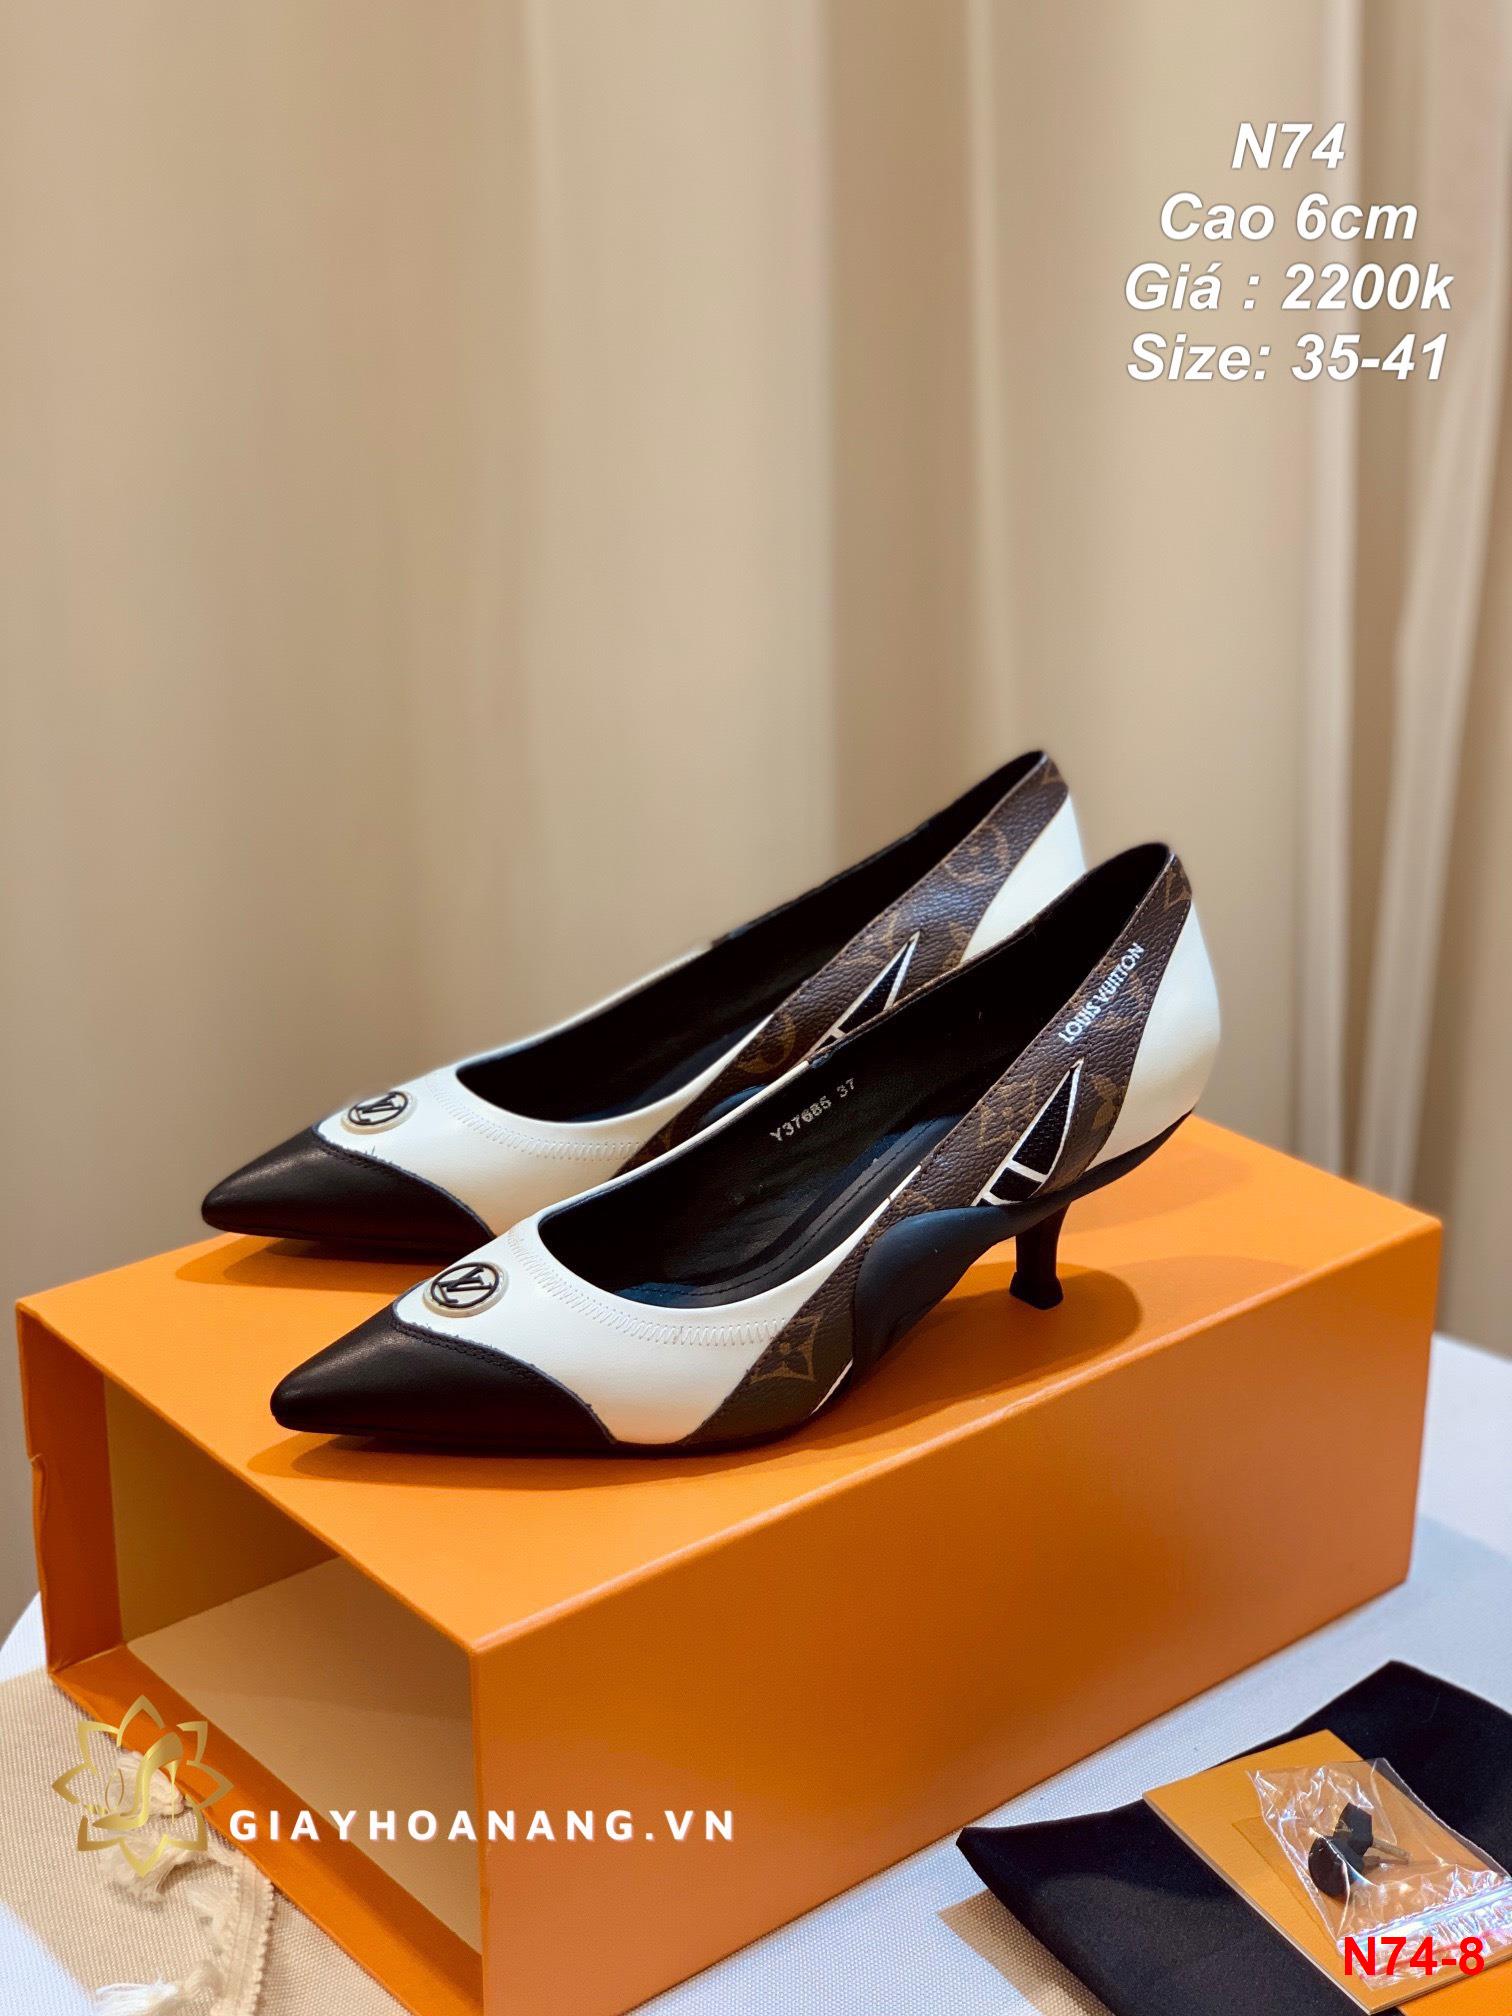 N74-8 Louis Vuitton giày cao 6cm siêu cấp